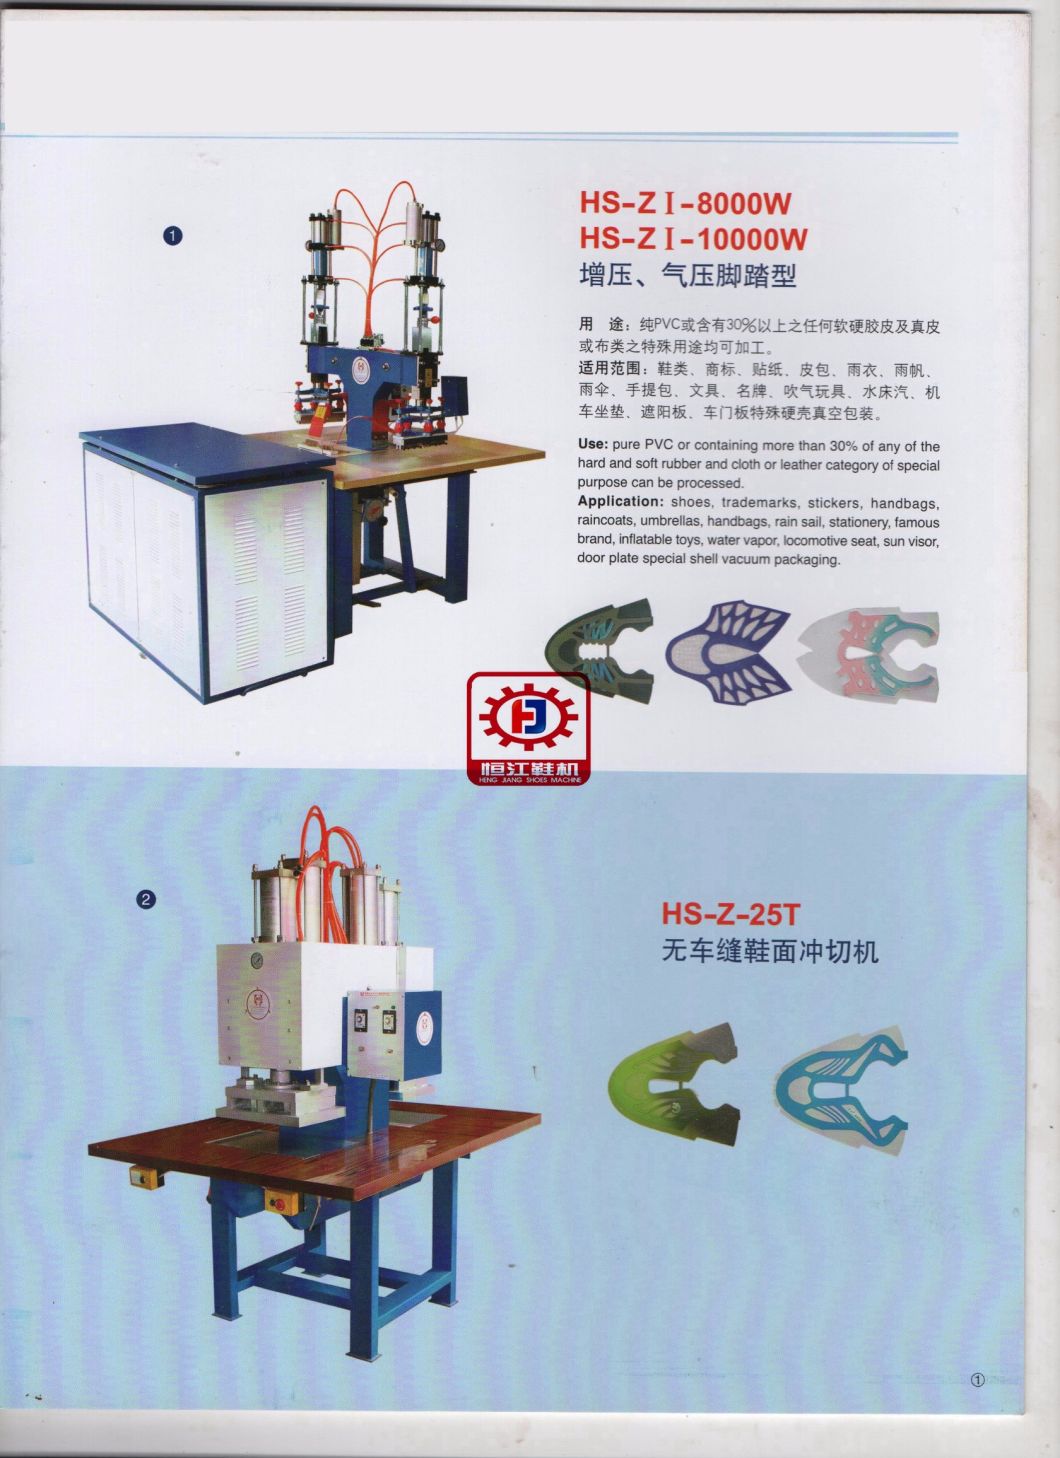 Hot Sale High Frequency PVC Folder Welding Machine Shoe Machine